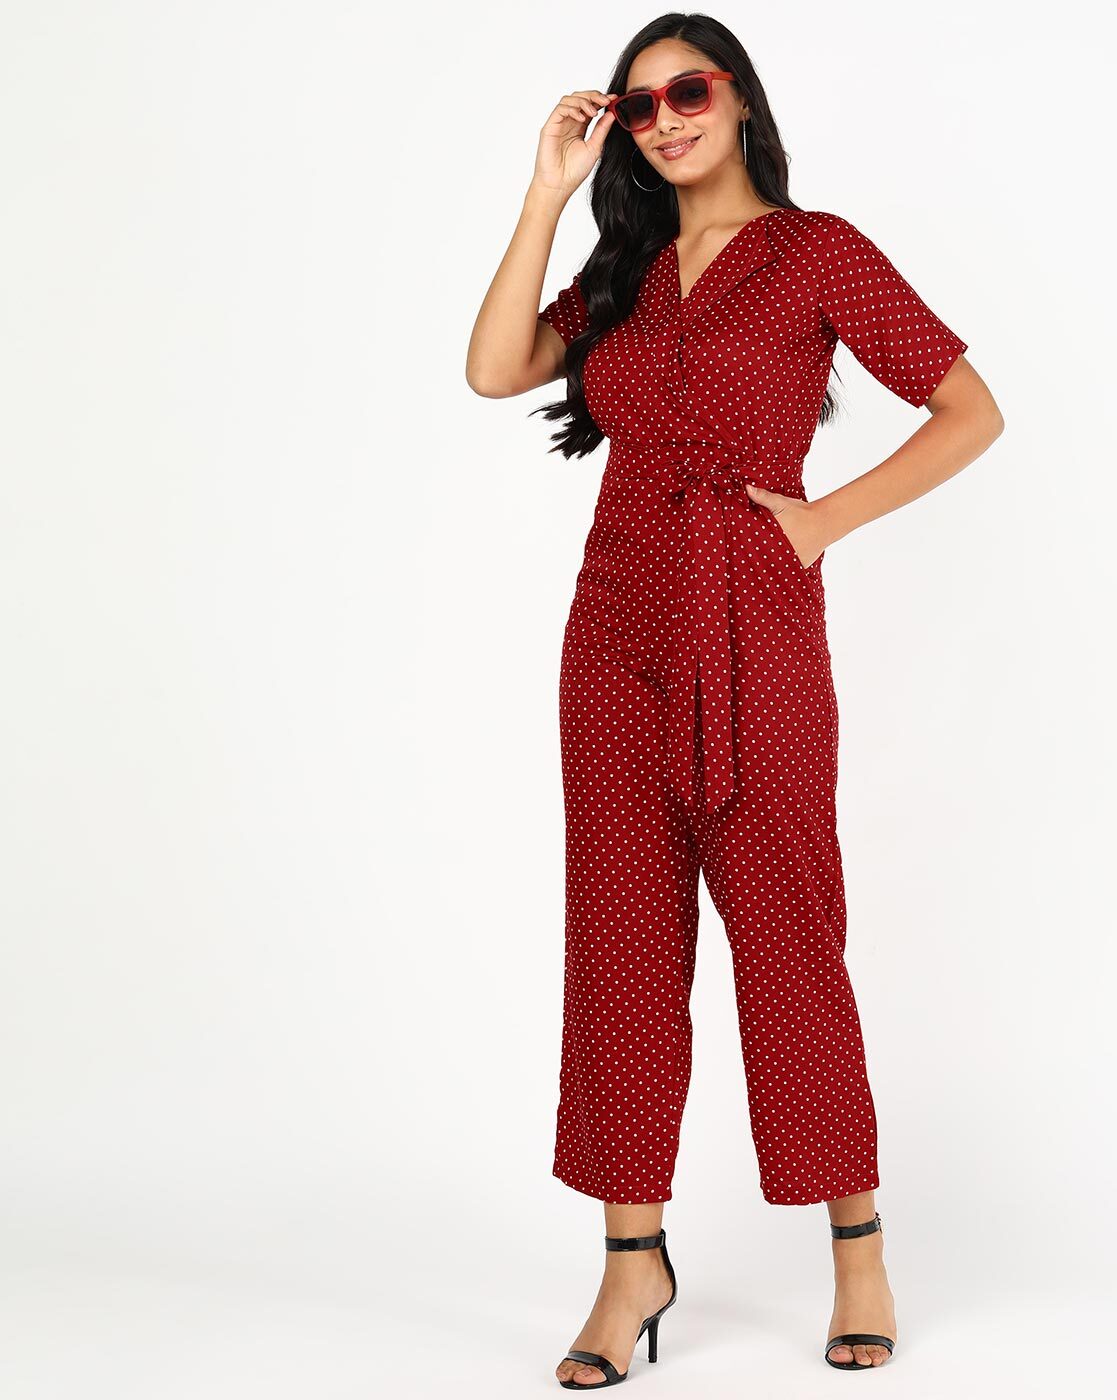 Red Polka Dot Jumpsuit With Ruffle Design, Women Jumpsuit, Ladies Jumpsuits,  जंपसूट - Ekta Clothing Manufacturing, Gurgaon